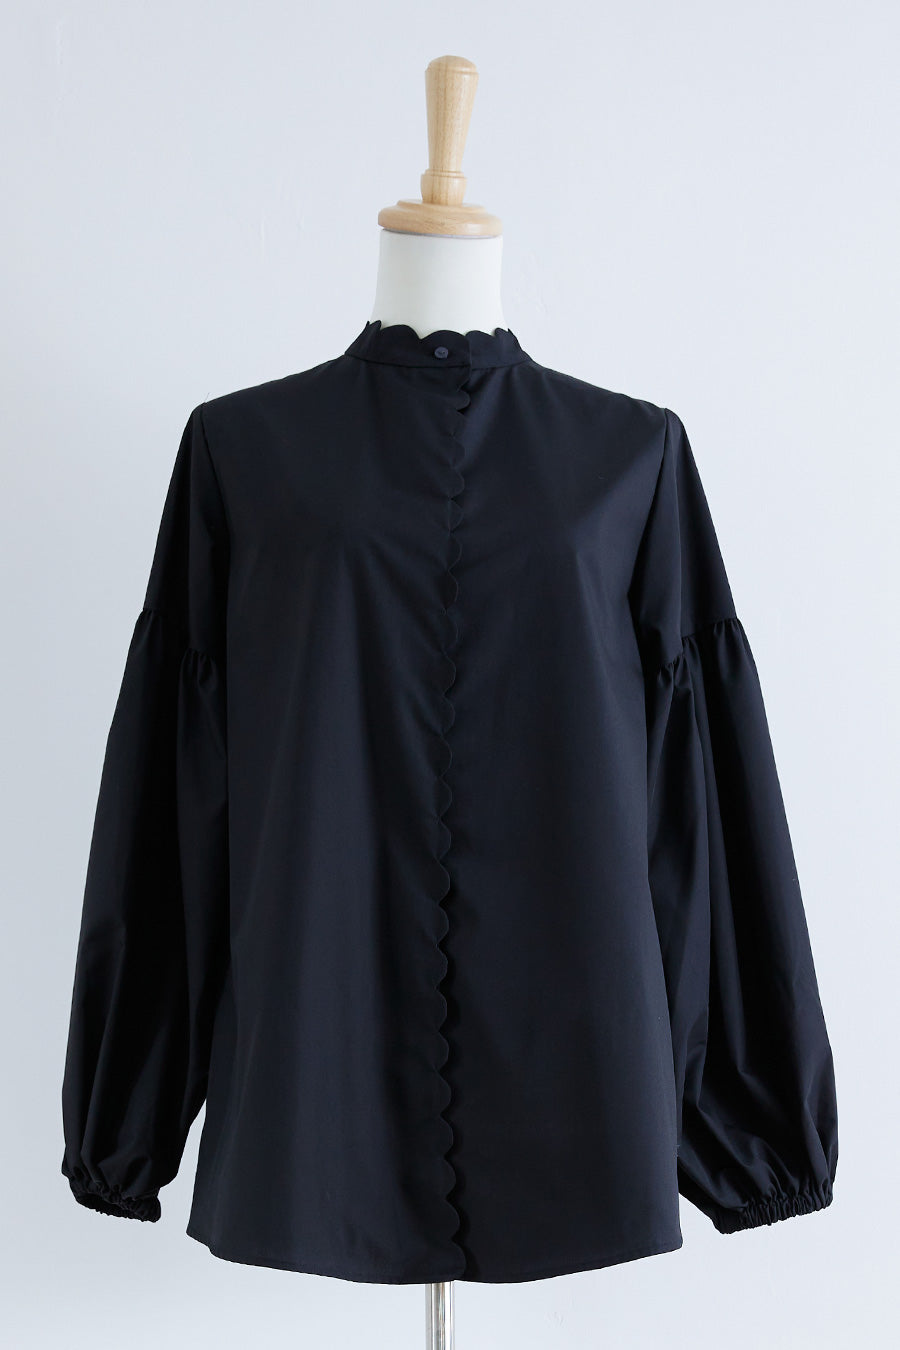 tiny scallop blouse / Black